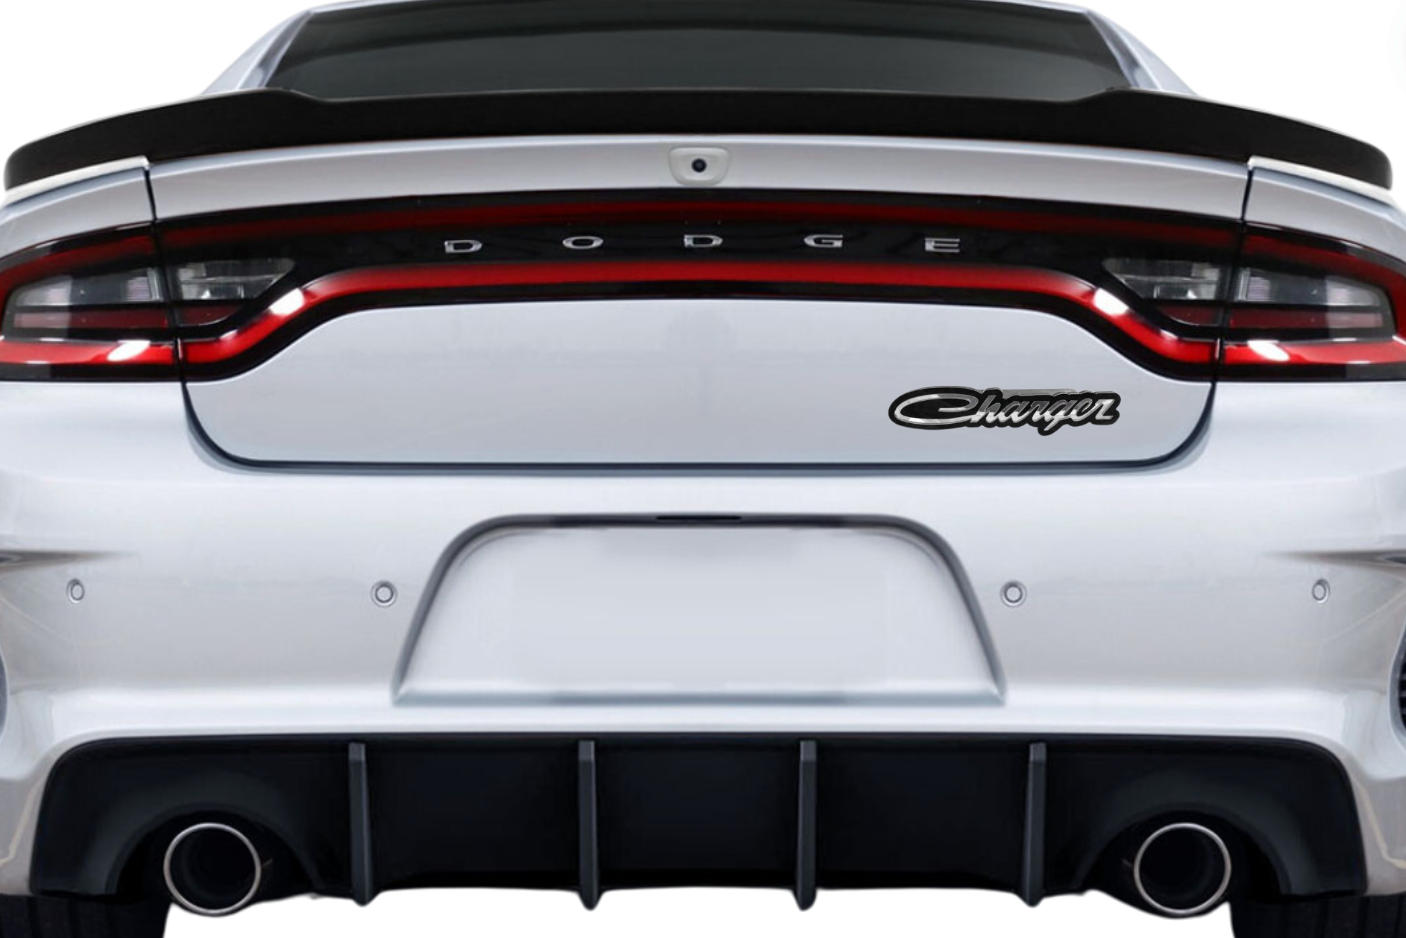 Dodge tailgate trunk rear emblem with Dodge Charger old logo